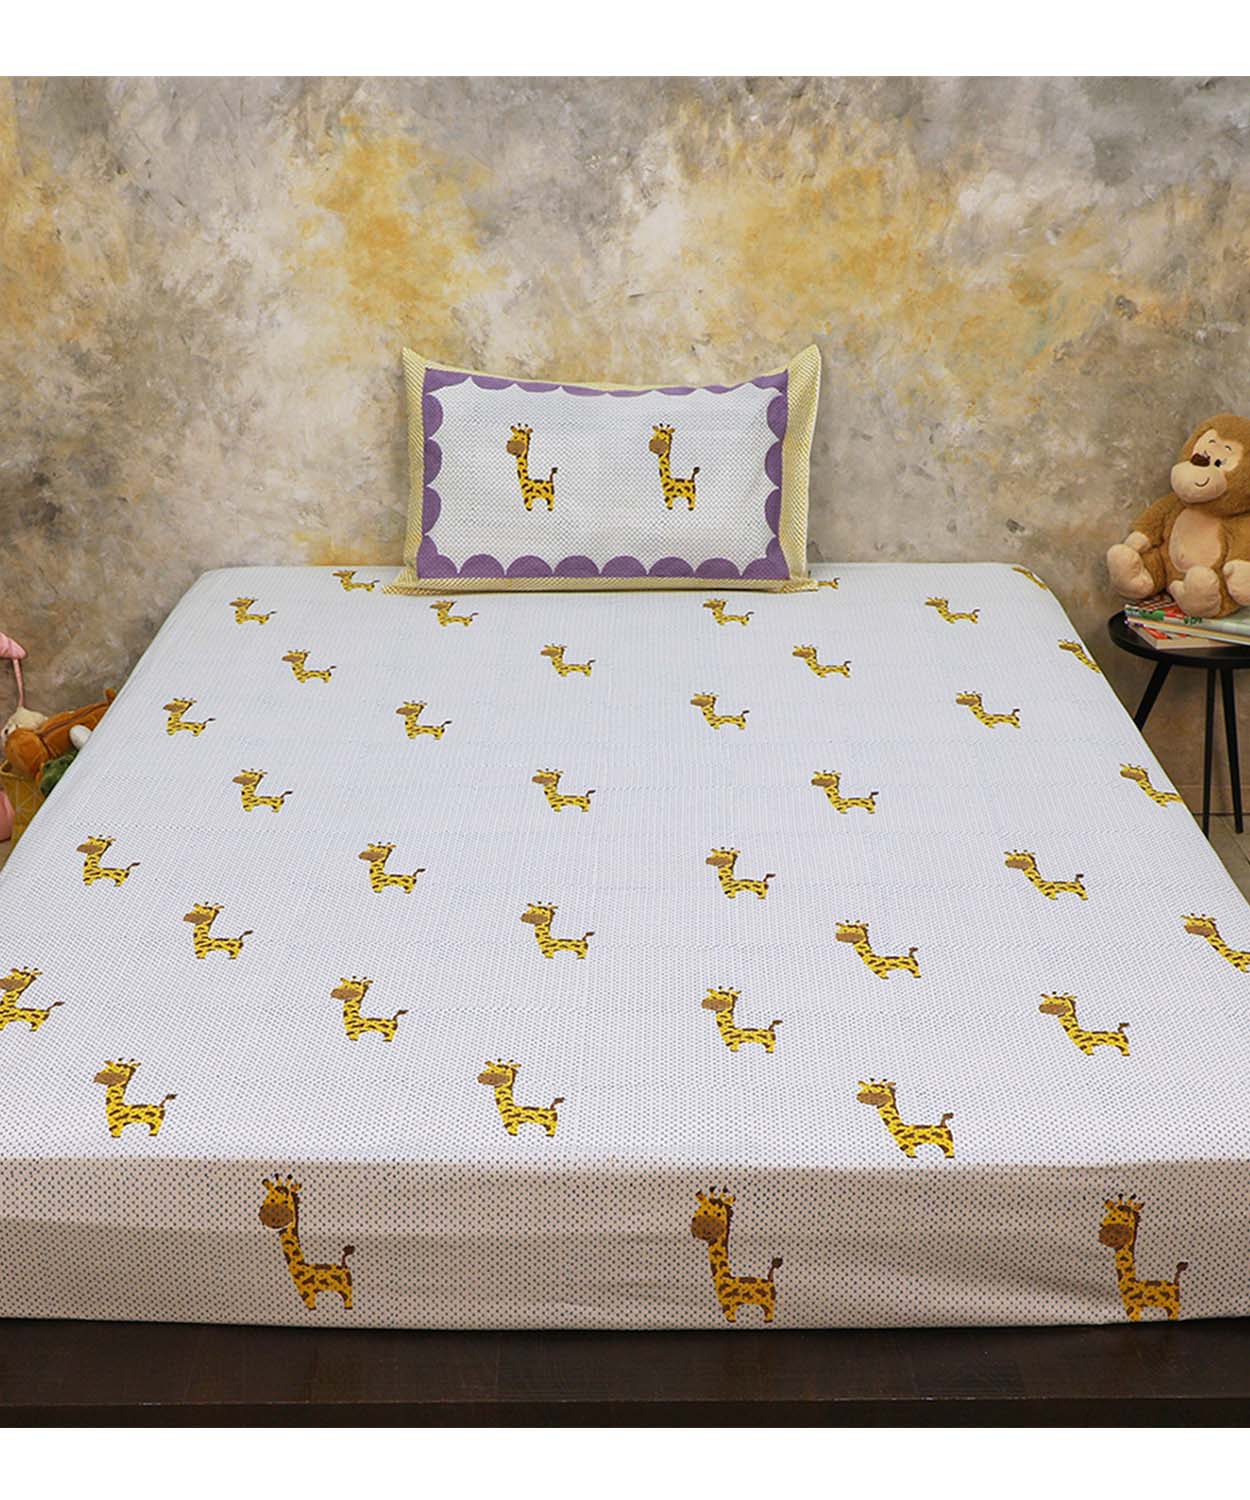 My Best Friend Gira The Giraffe Single Bed Set (Flat)